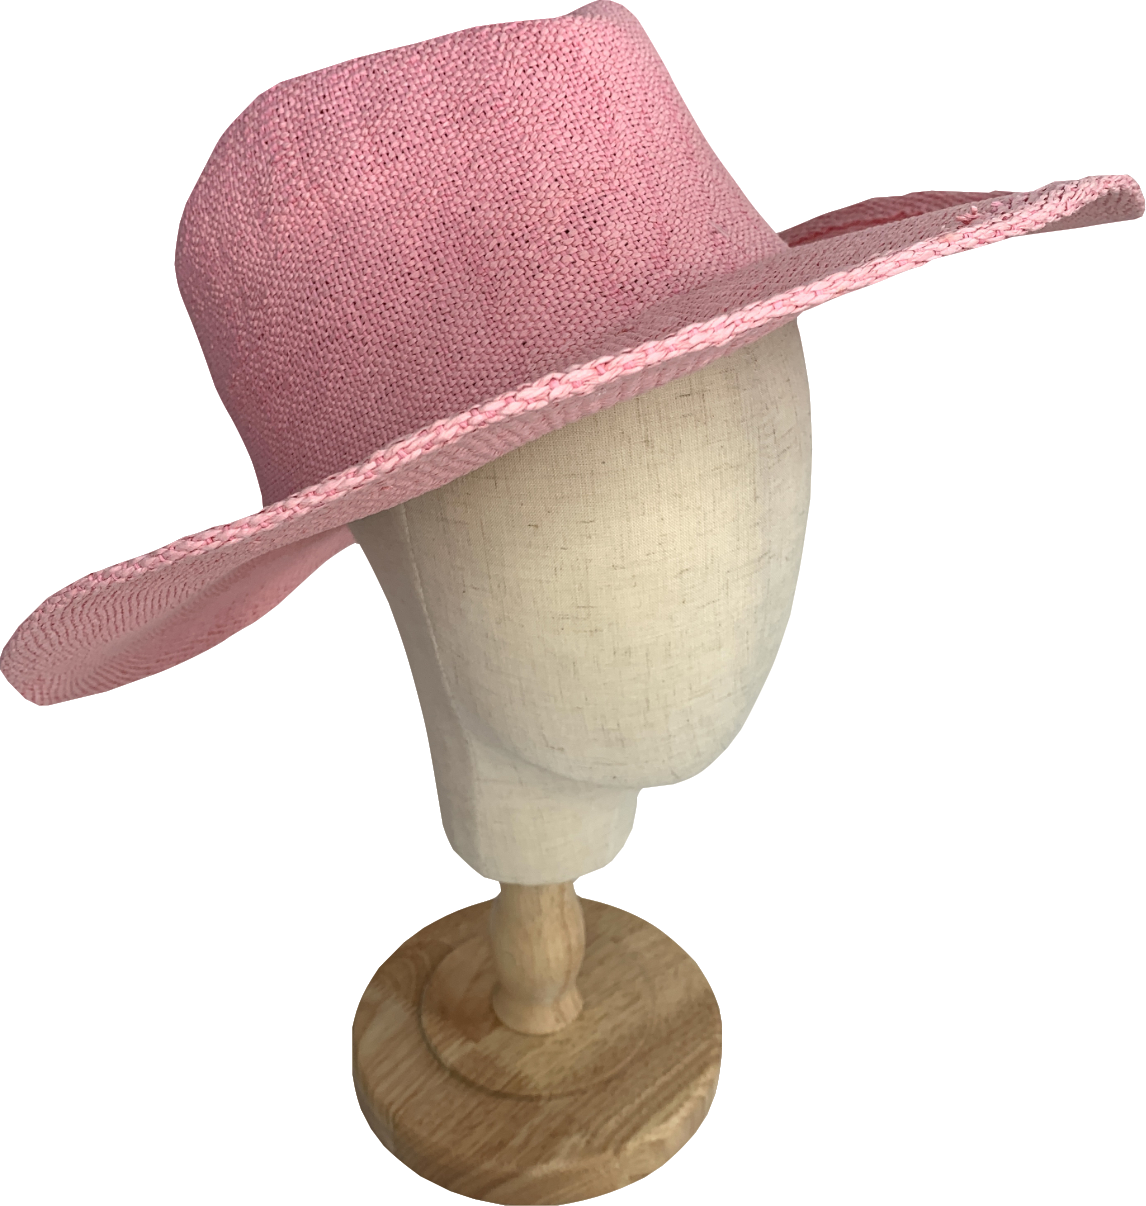 ASOS Pink Straw Cowboy Hat One Size